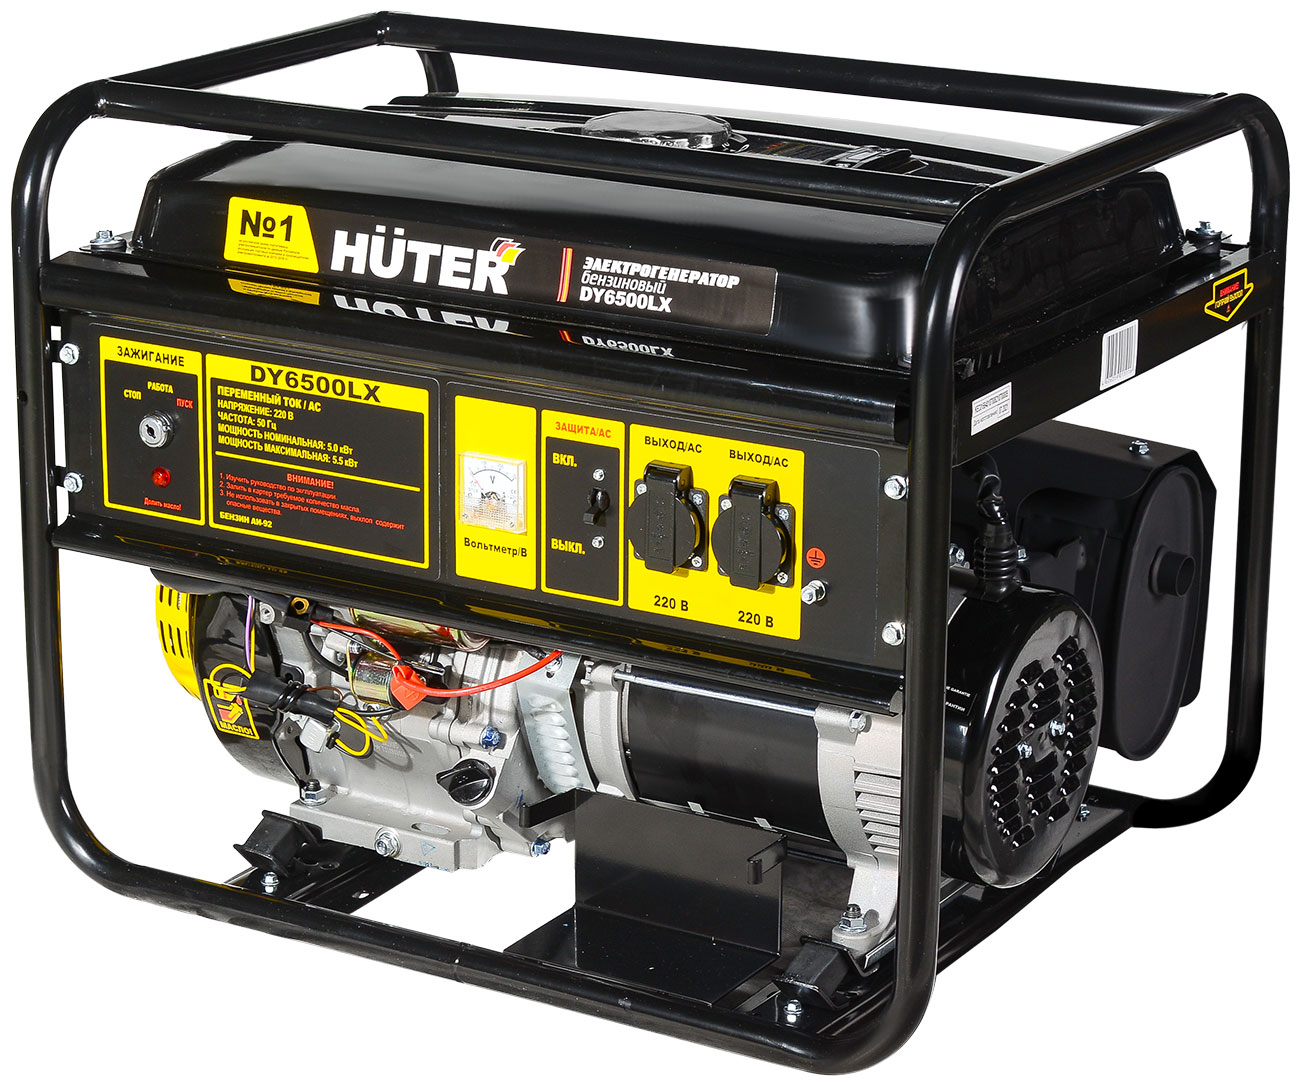 Электрический генератор и электростанция Huter DY6500LX- электростартер авр для бензогенератор huter dy5000lx dy6500lx